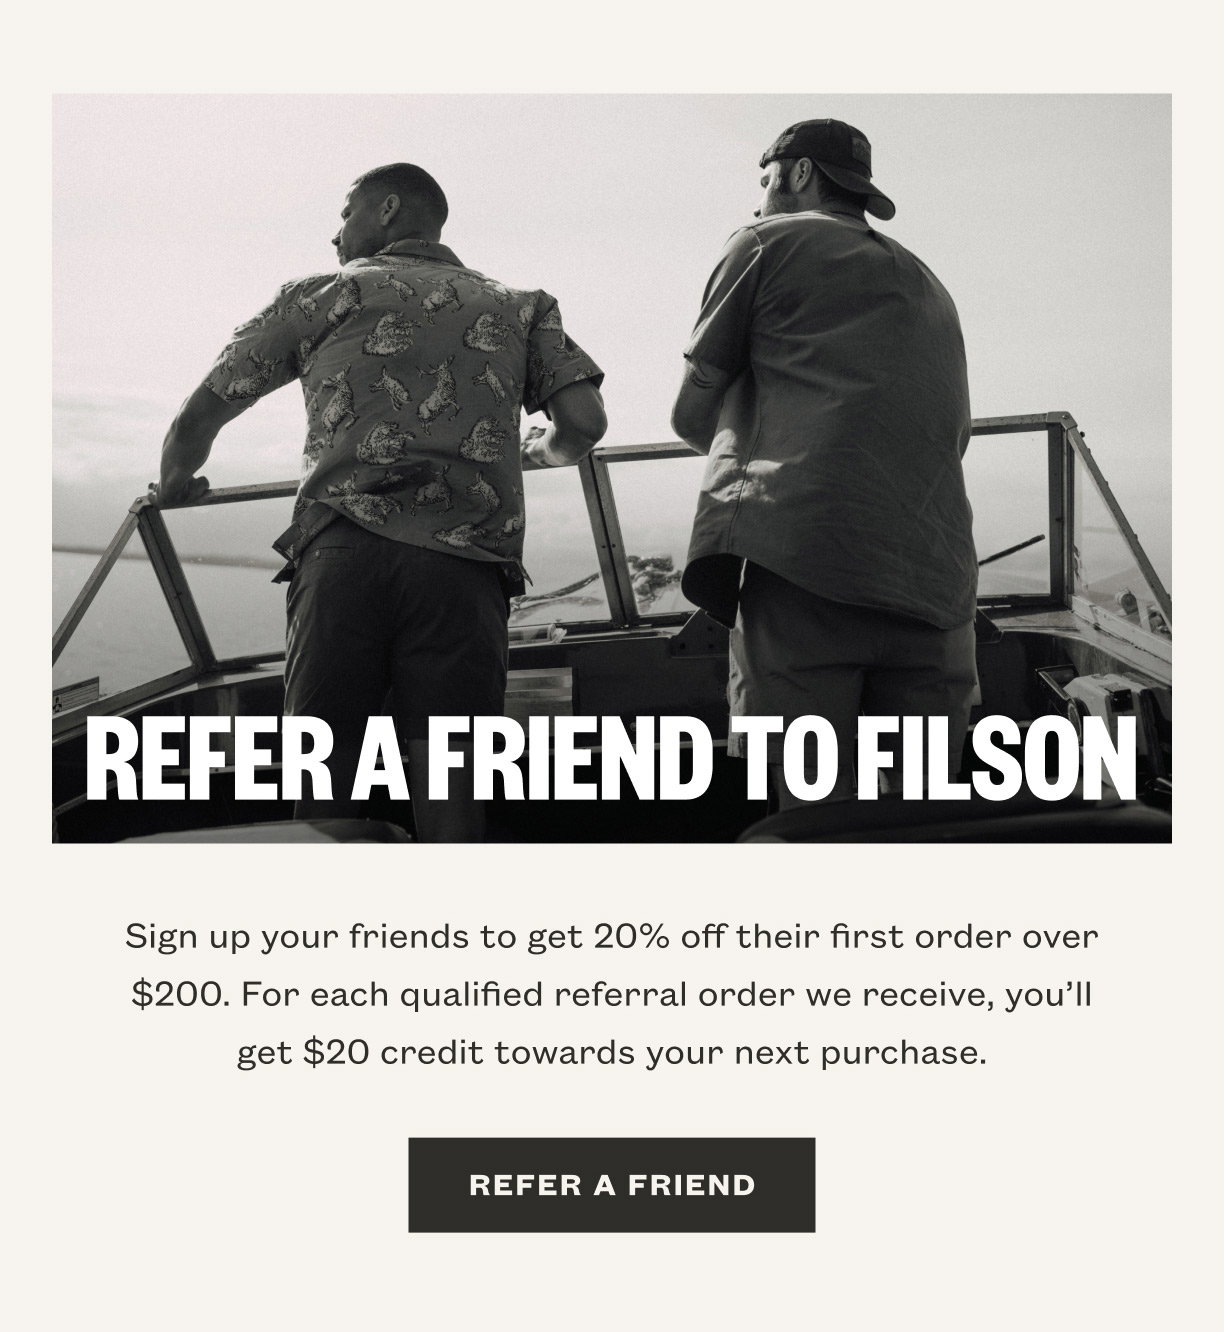 Refer A Friend to Filson